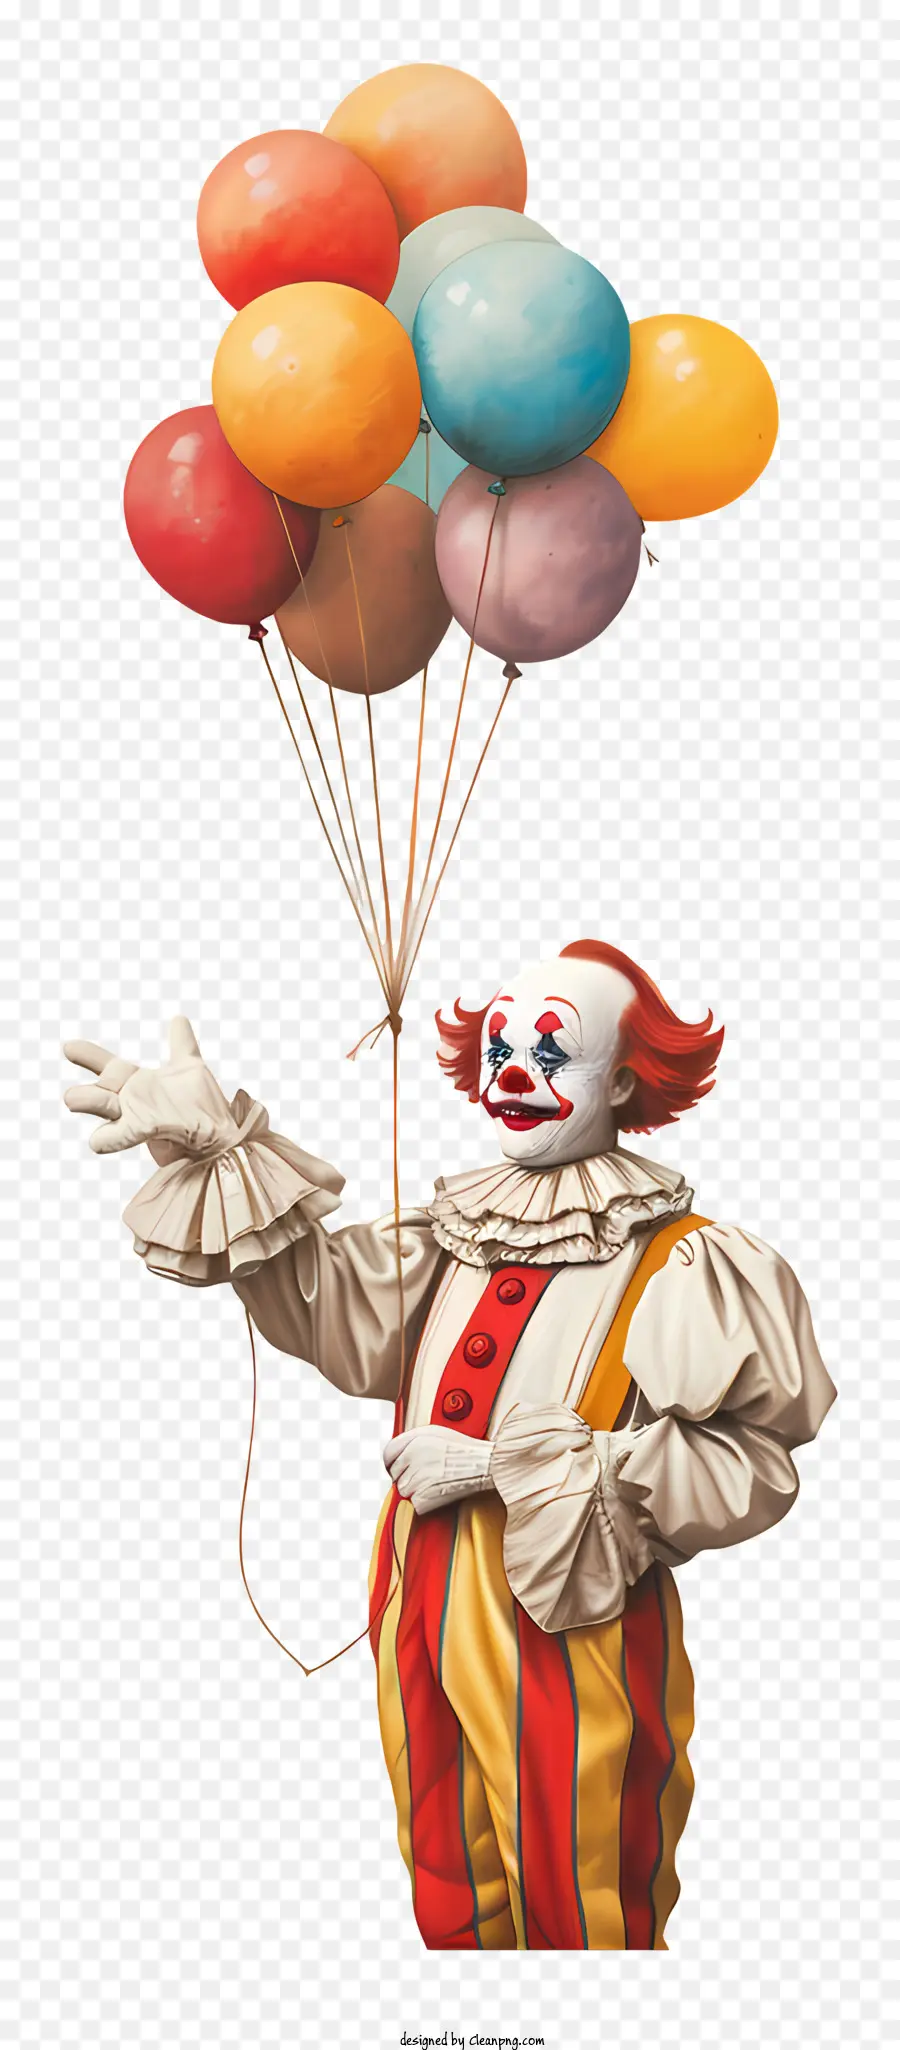 Clown mit Luftballons Cartoon Charakter Clown bunte Luftballons große Augen - Buntes Clown -Halting -Luftballons repräsentiert Freiheit und Freude